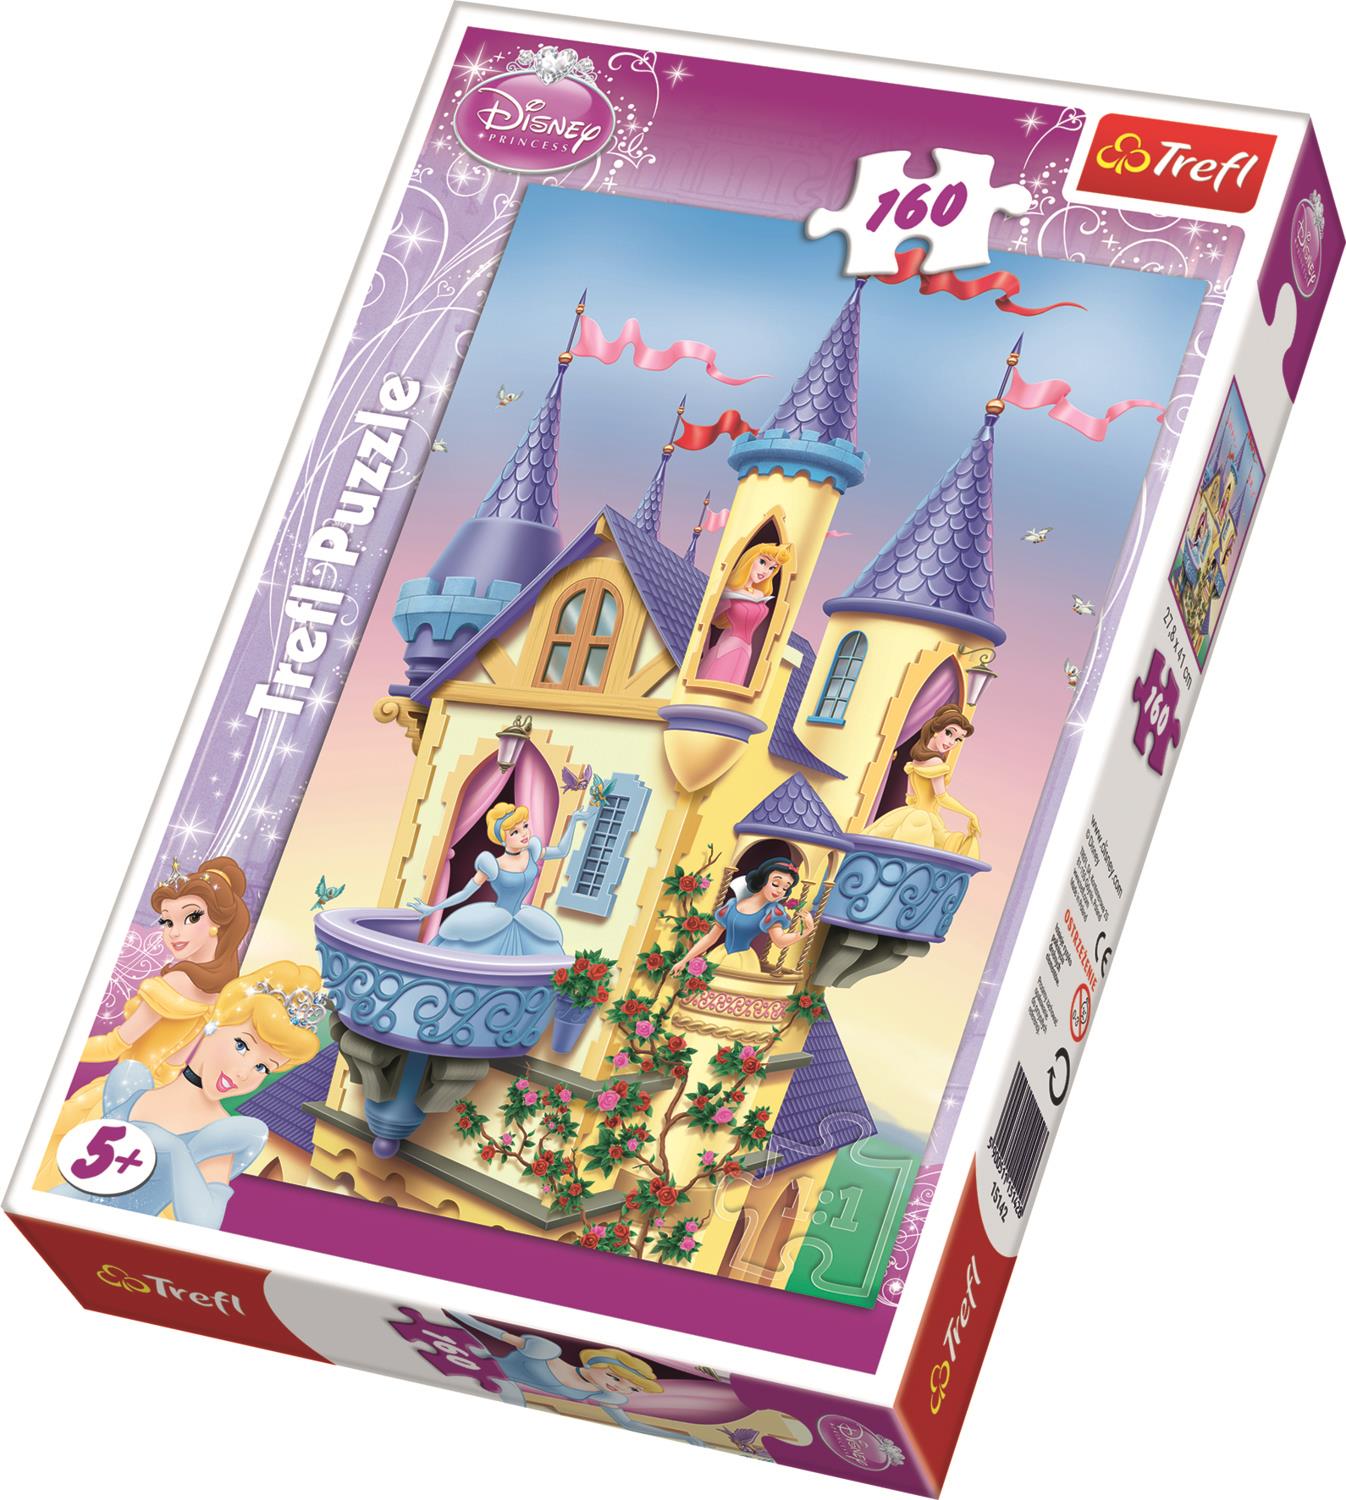 Trefl Çocuk Puzzle 15142 Princess Palace Of Disney Princess, Disney 160 Parça Puzzle